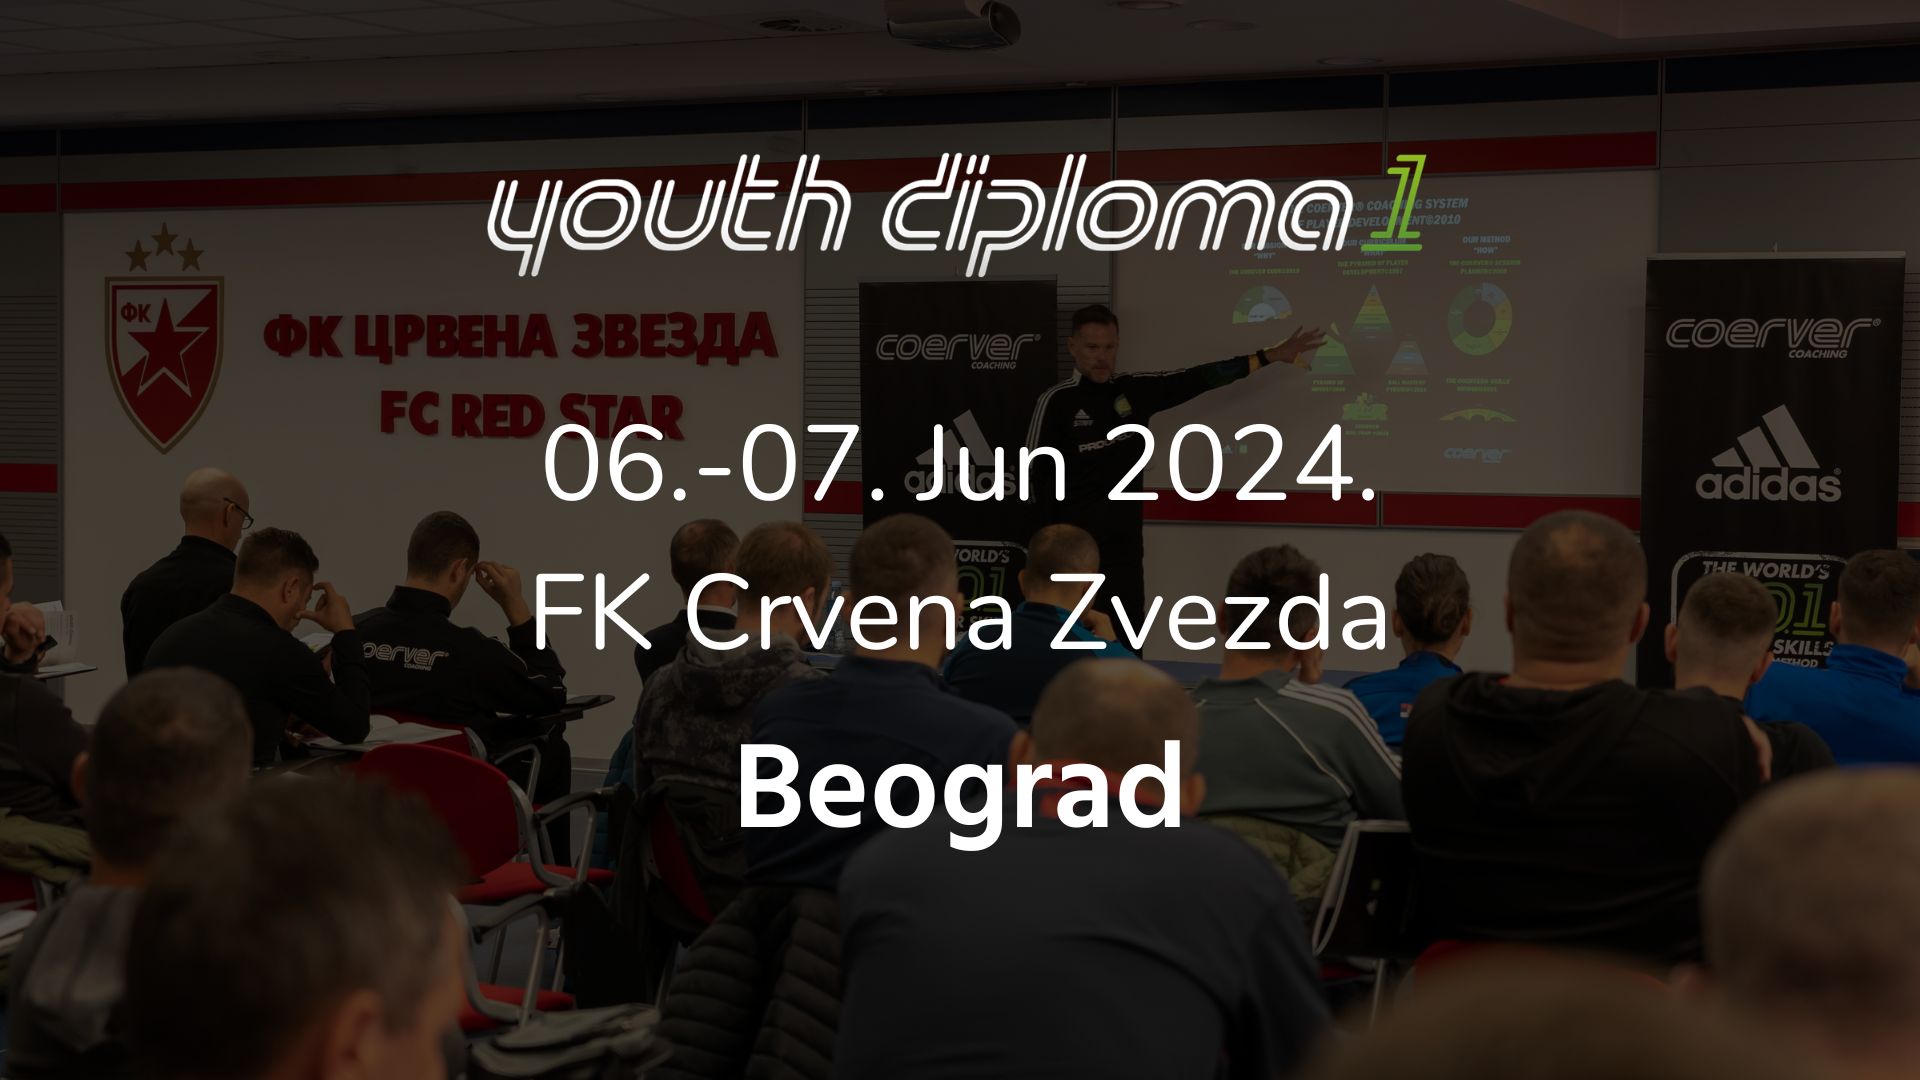 Coerver® Coaching Youth Diploma 1 – Nivo 2 – Beograd